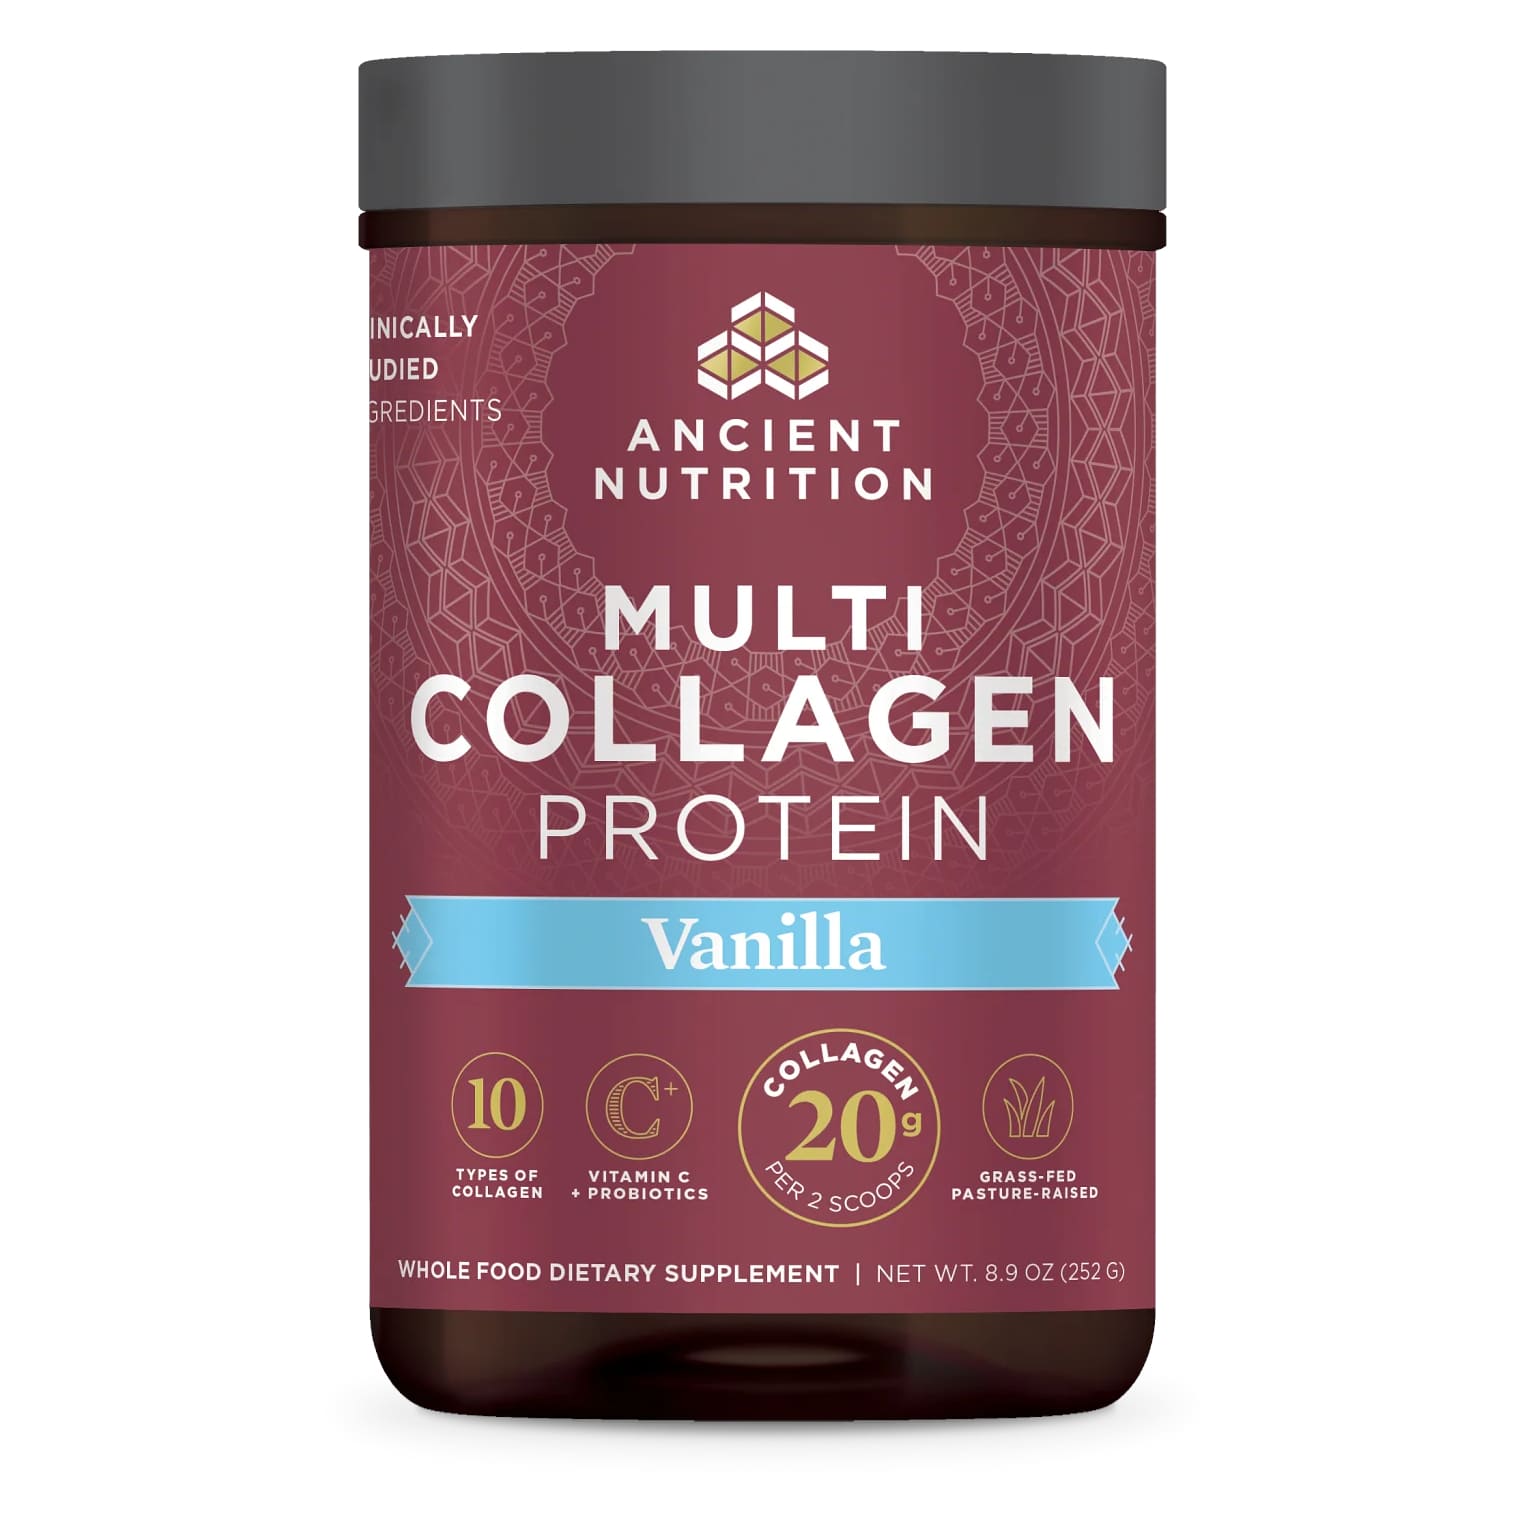 цена Коллаген Ancient Nutrition Multi Protein 10 Types Vitamin C + Probiotics Vanilla, 252 г